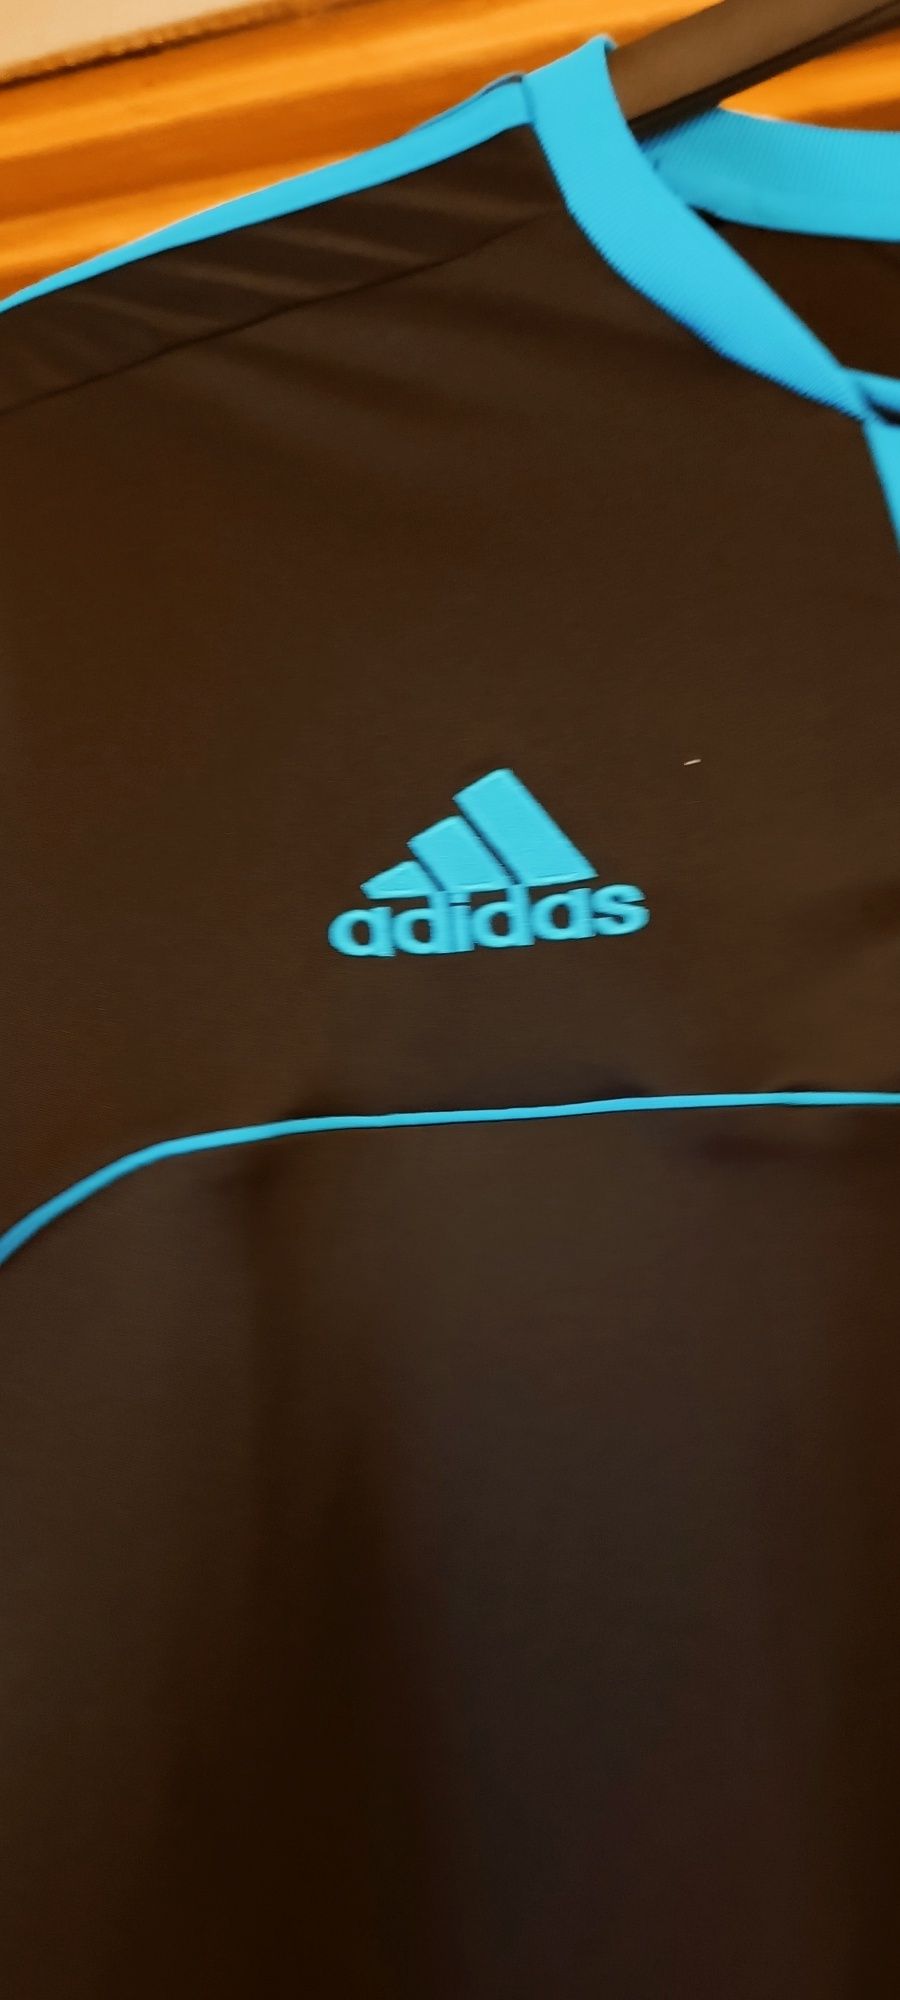 Męska koszulka sportowa Adidas